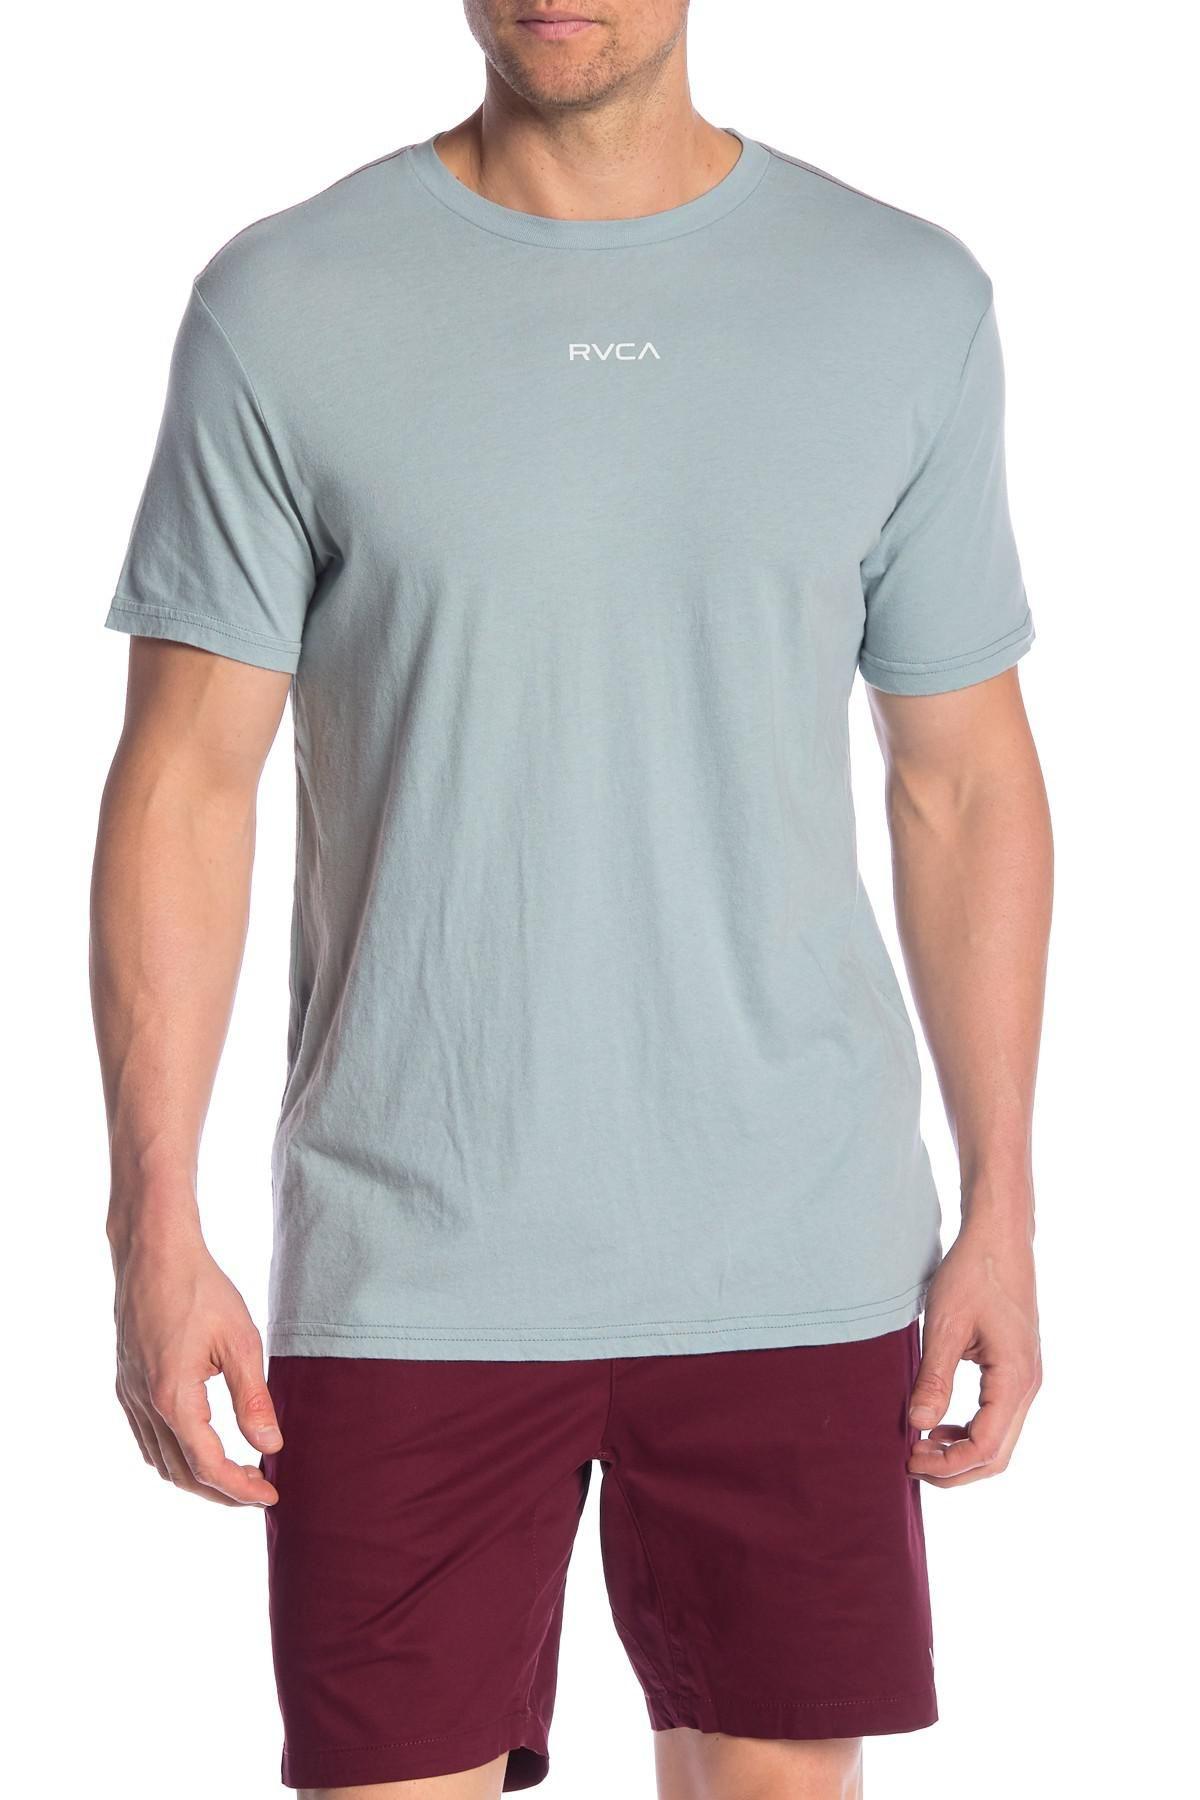 RVCA Small Logo - Lyst - Rvca Small Logo Graphic T-shirt in Blue for Men